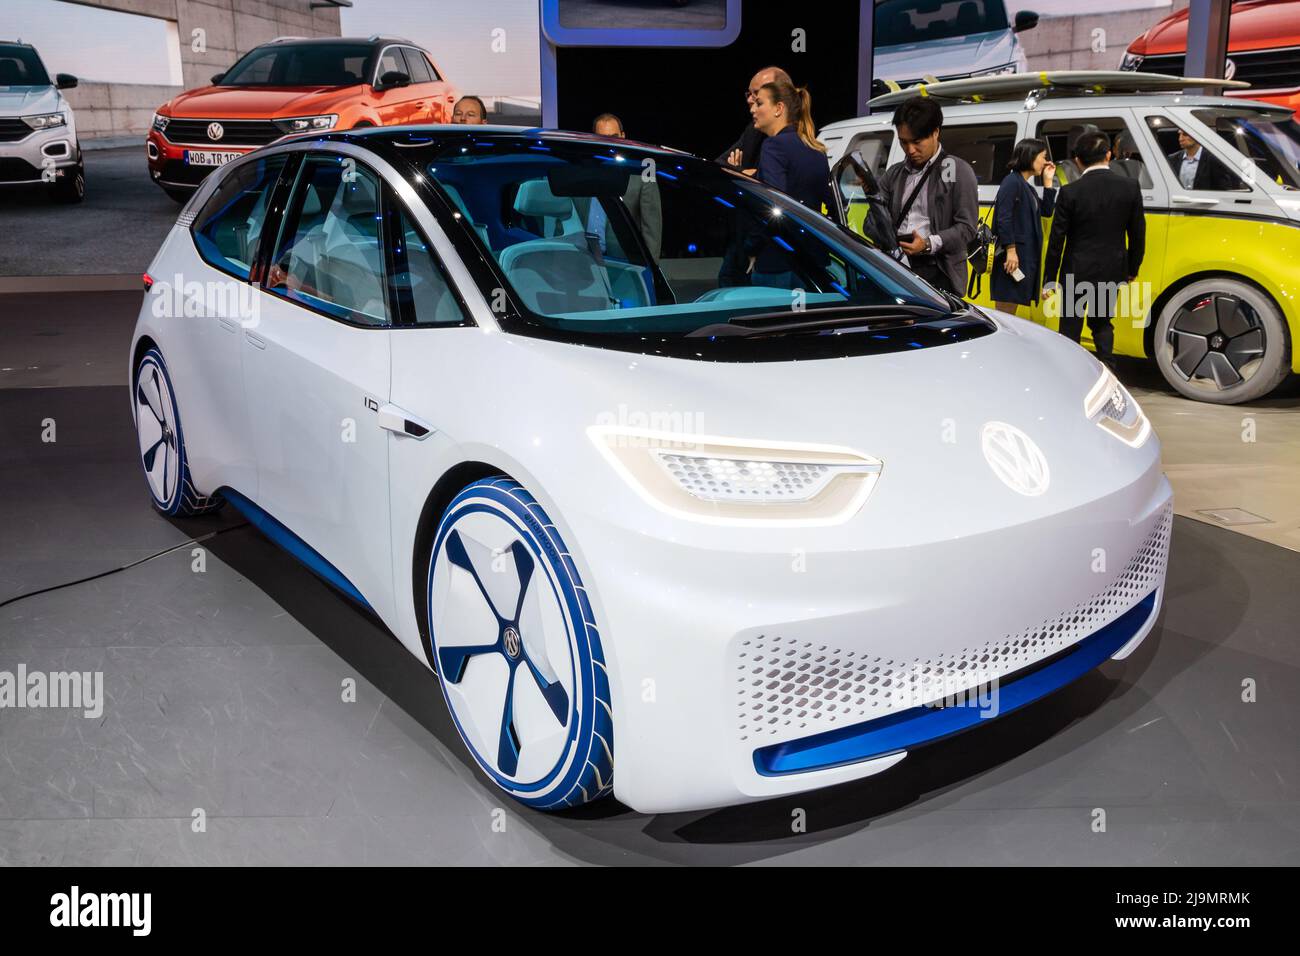 Volkswagen ID Concept autonomous electric car showcased at the Frankfurt IAA Motor Show. Germany - September 12, 2017. Stock Photo